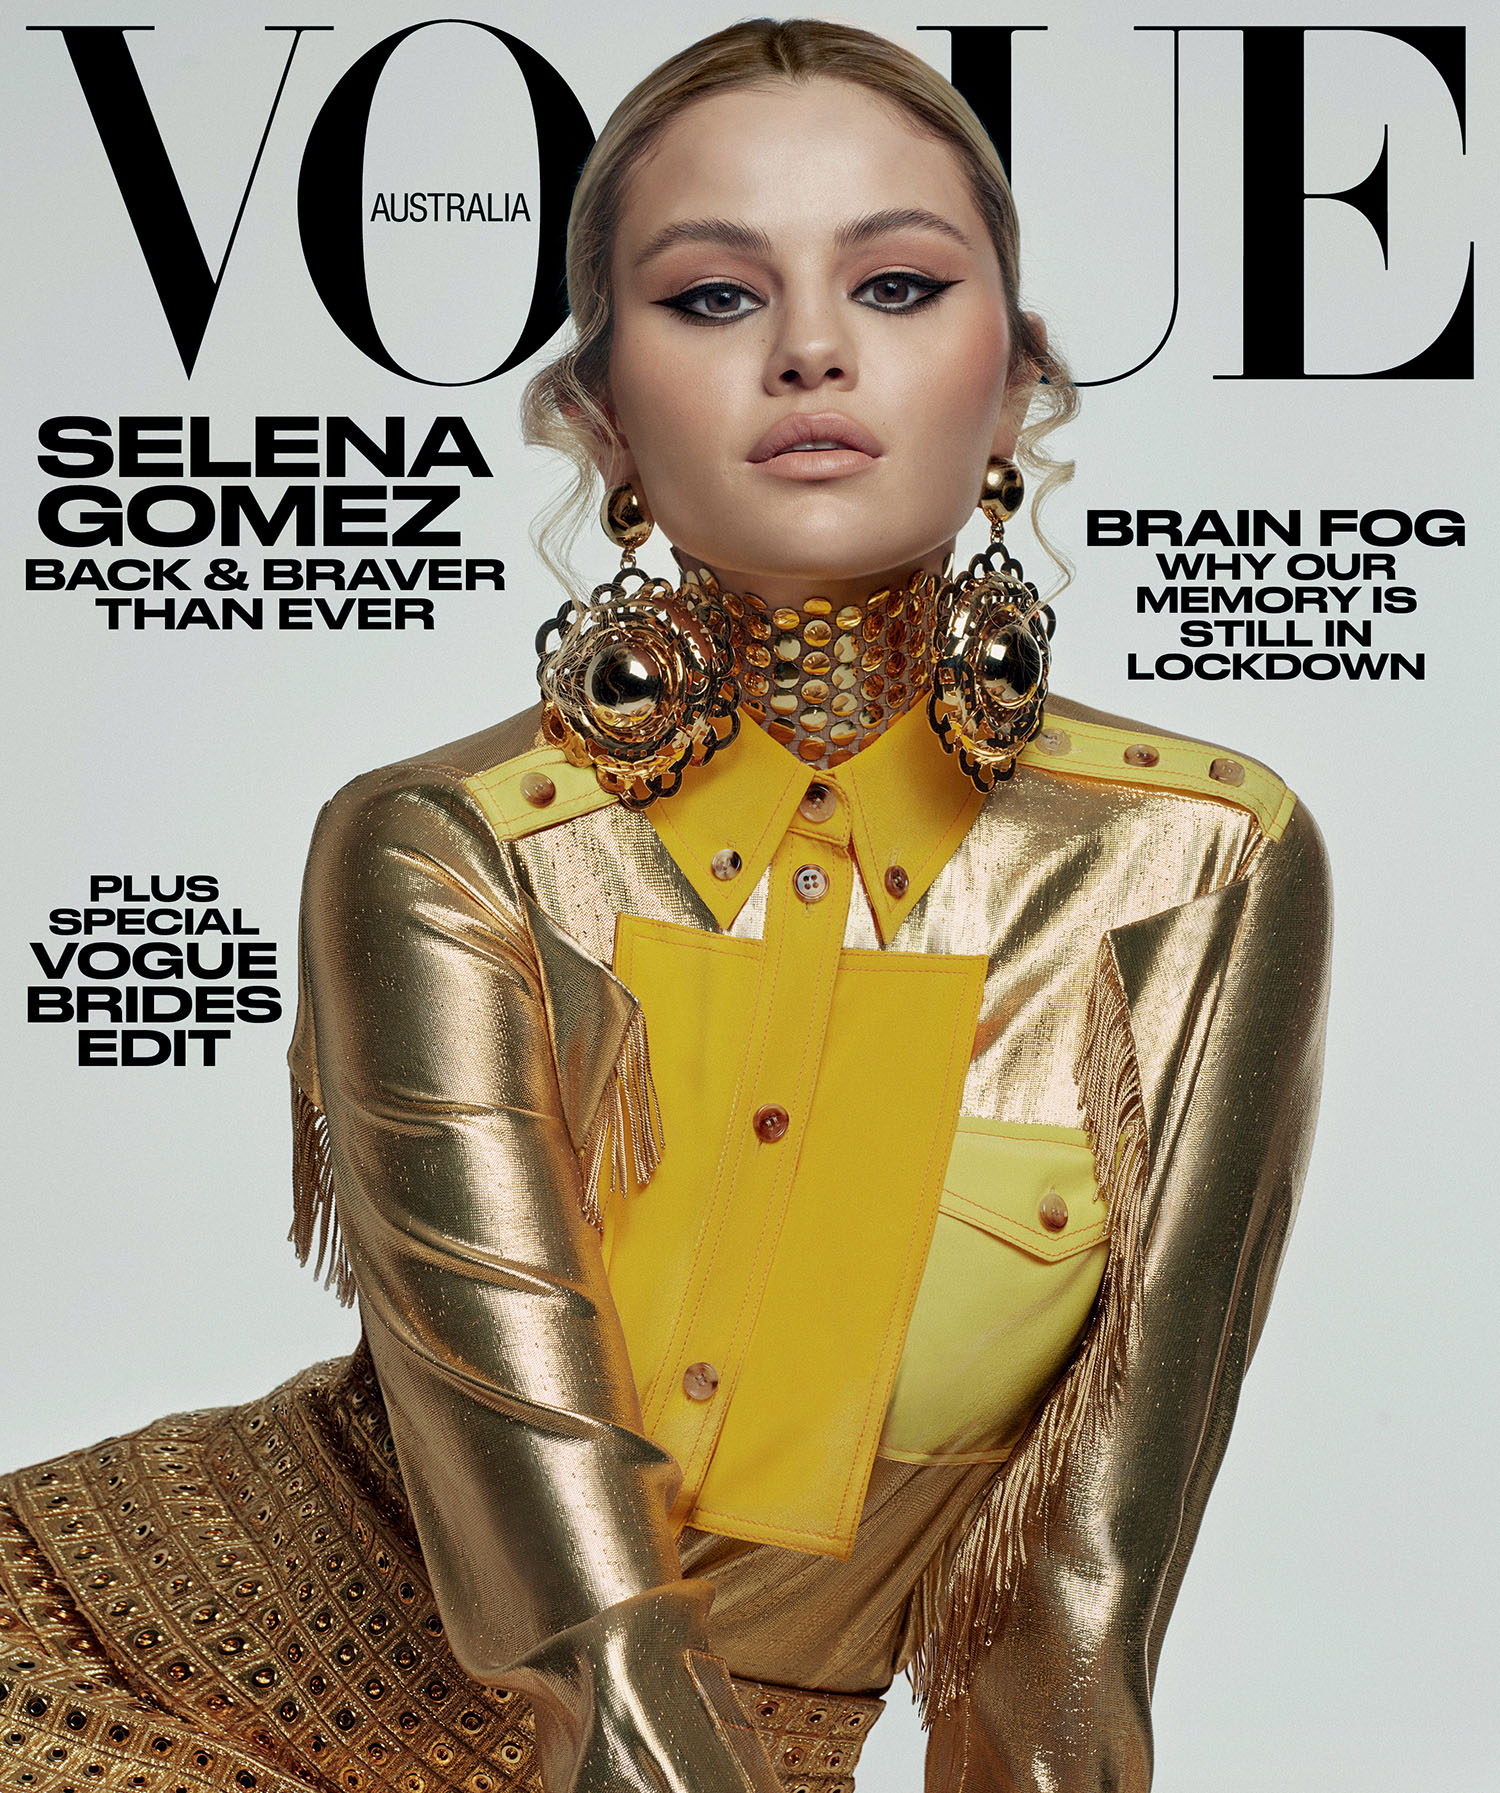 Selena Gomez covers Vogue Australia July 2021 and Vogue Singapore